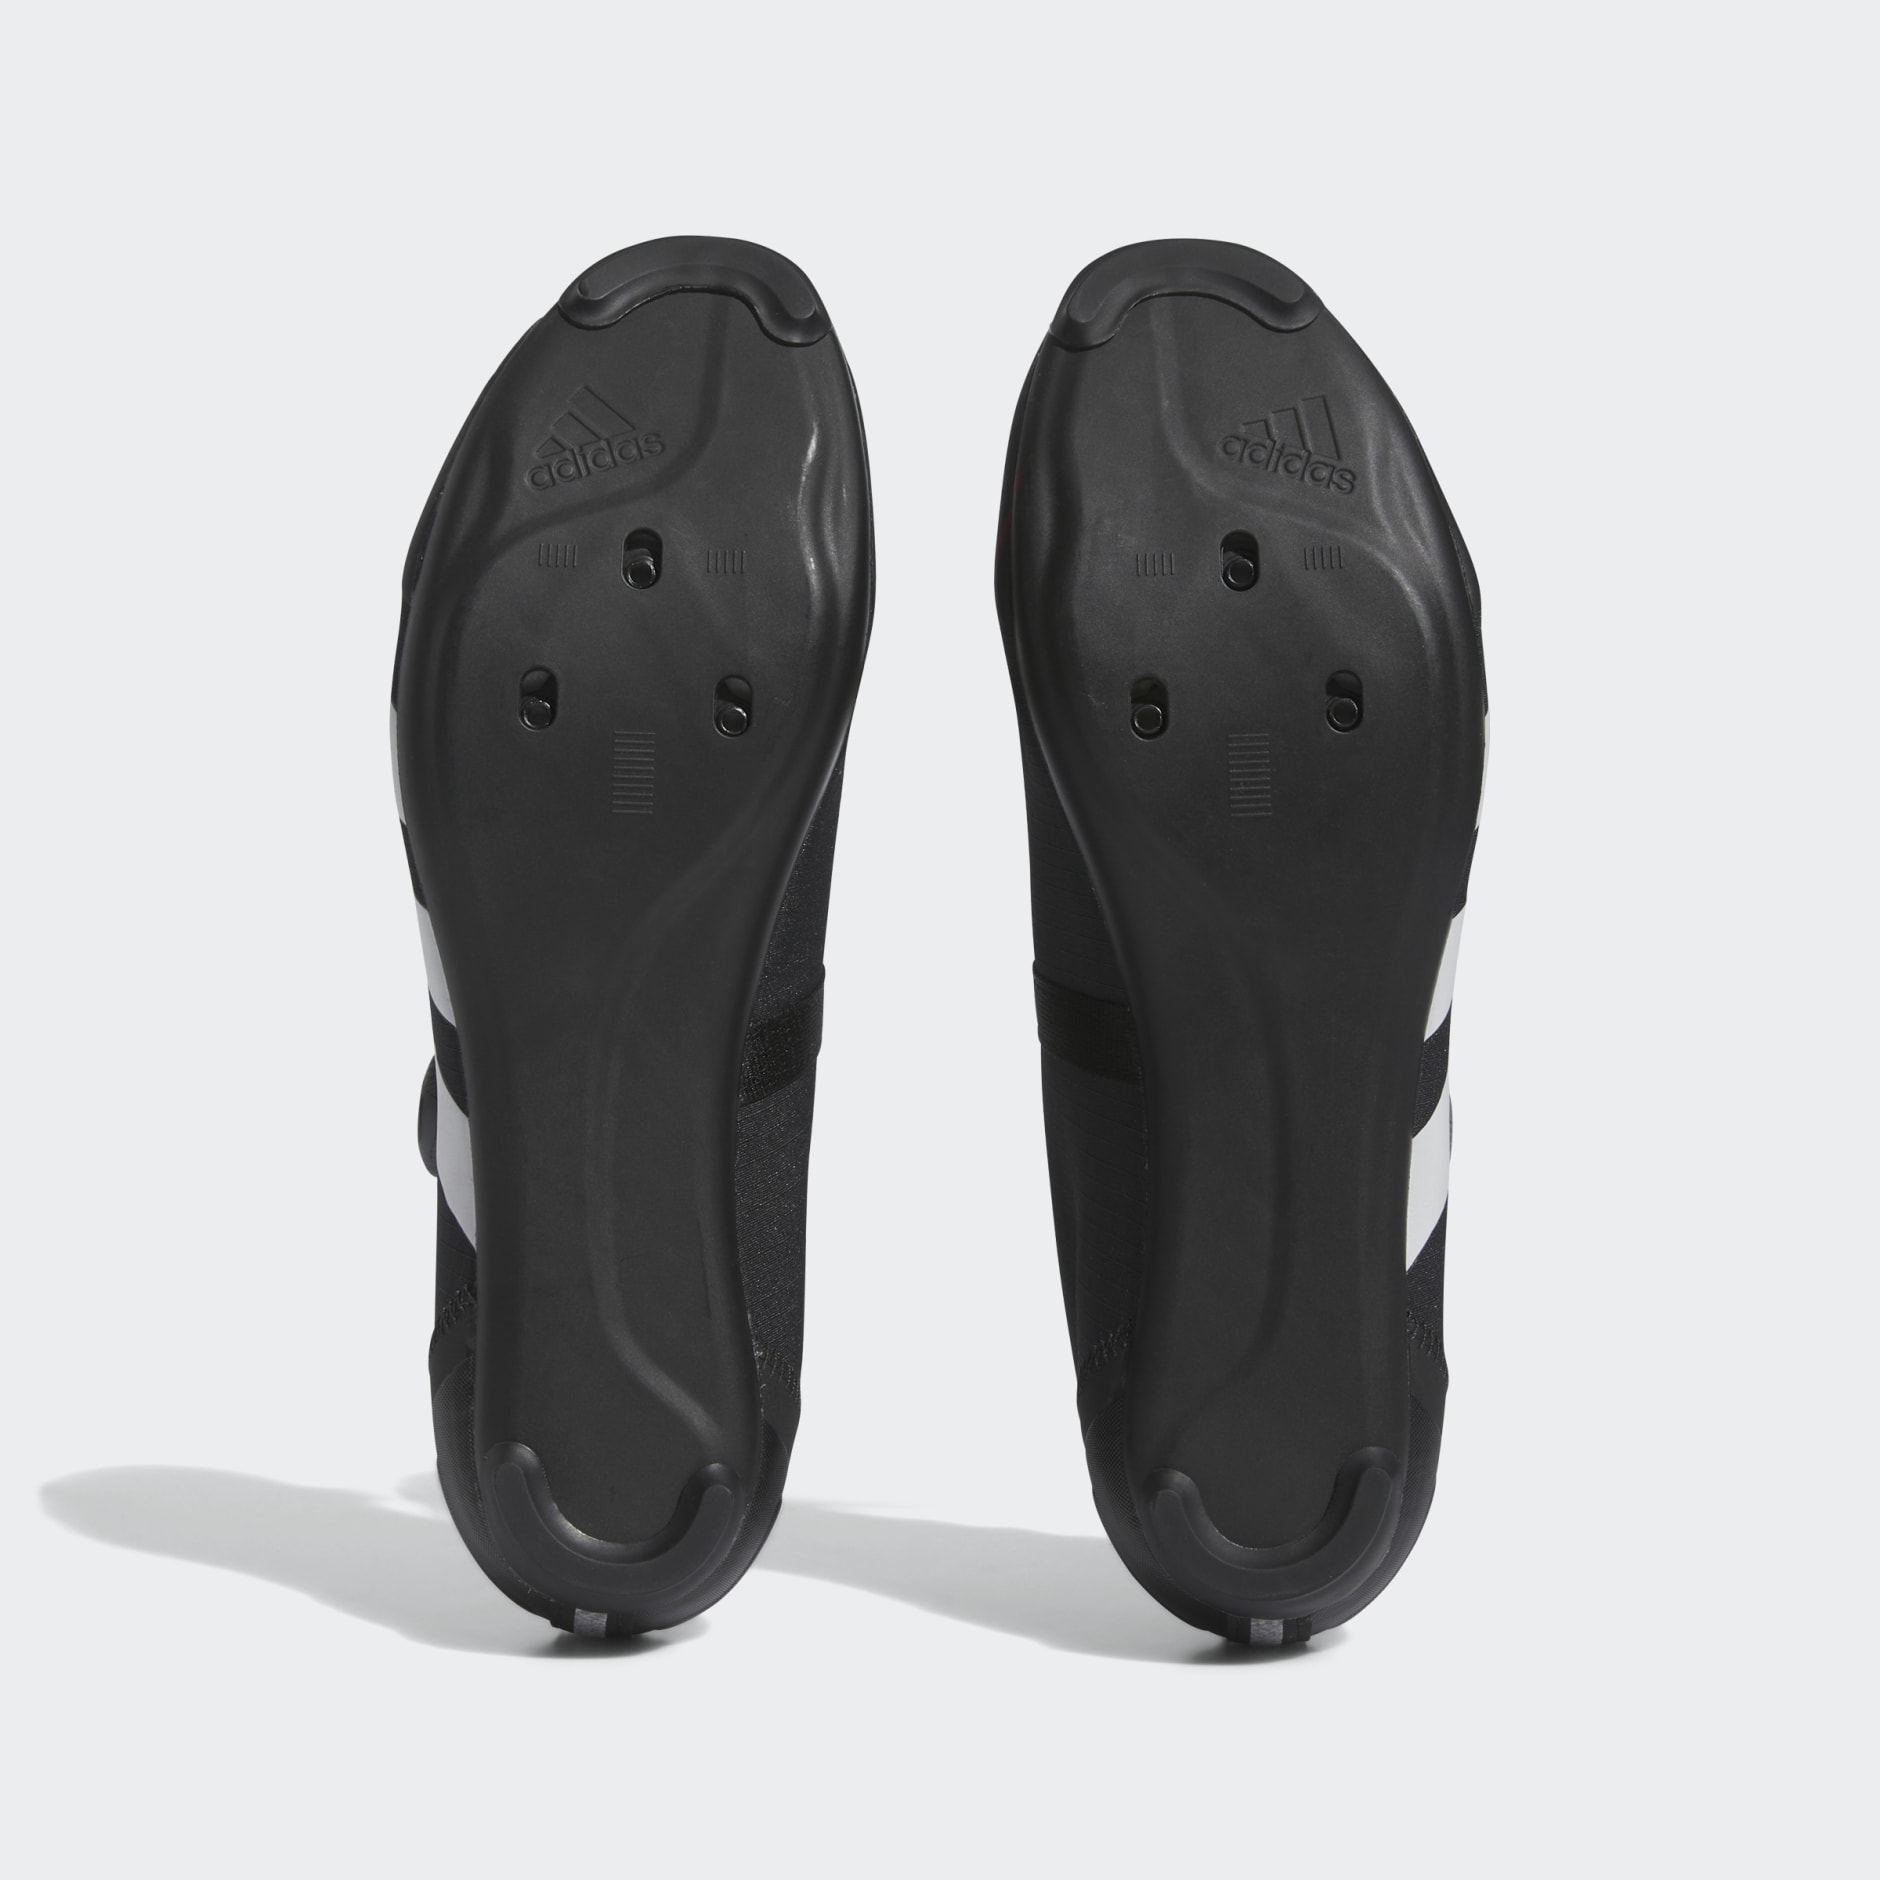 Curiosidad Planificado administrar All products - The Road BOA Cycling Shoes - Black | adidas Bahrain